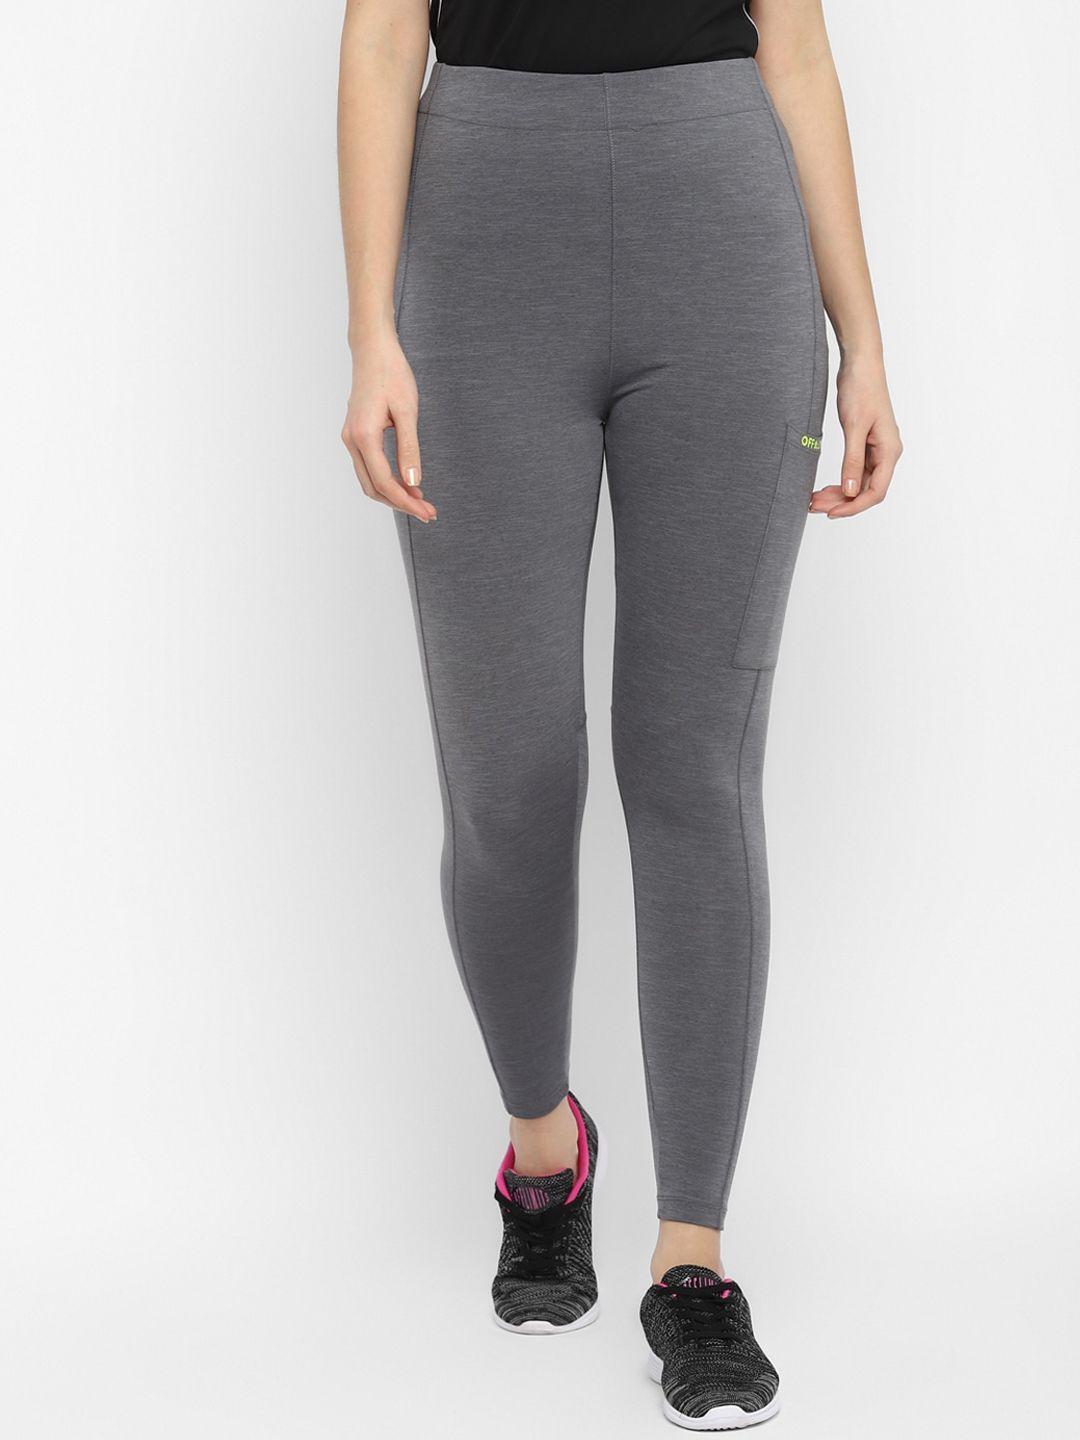 off-limits-women-grey-melange-solid-tights